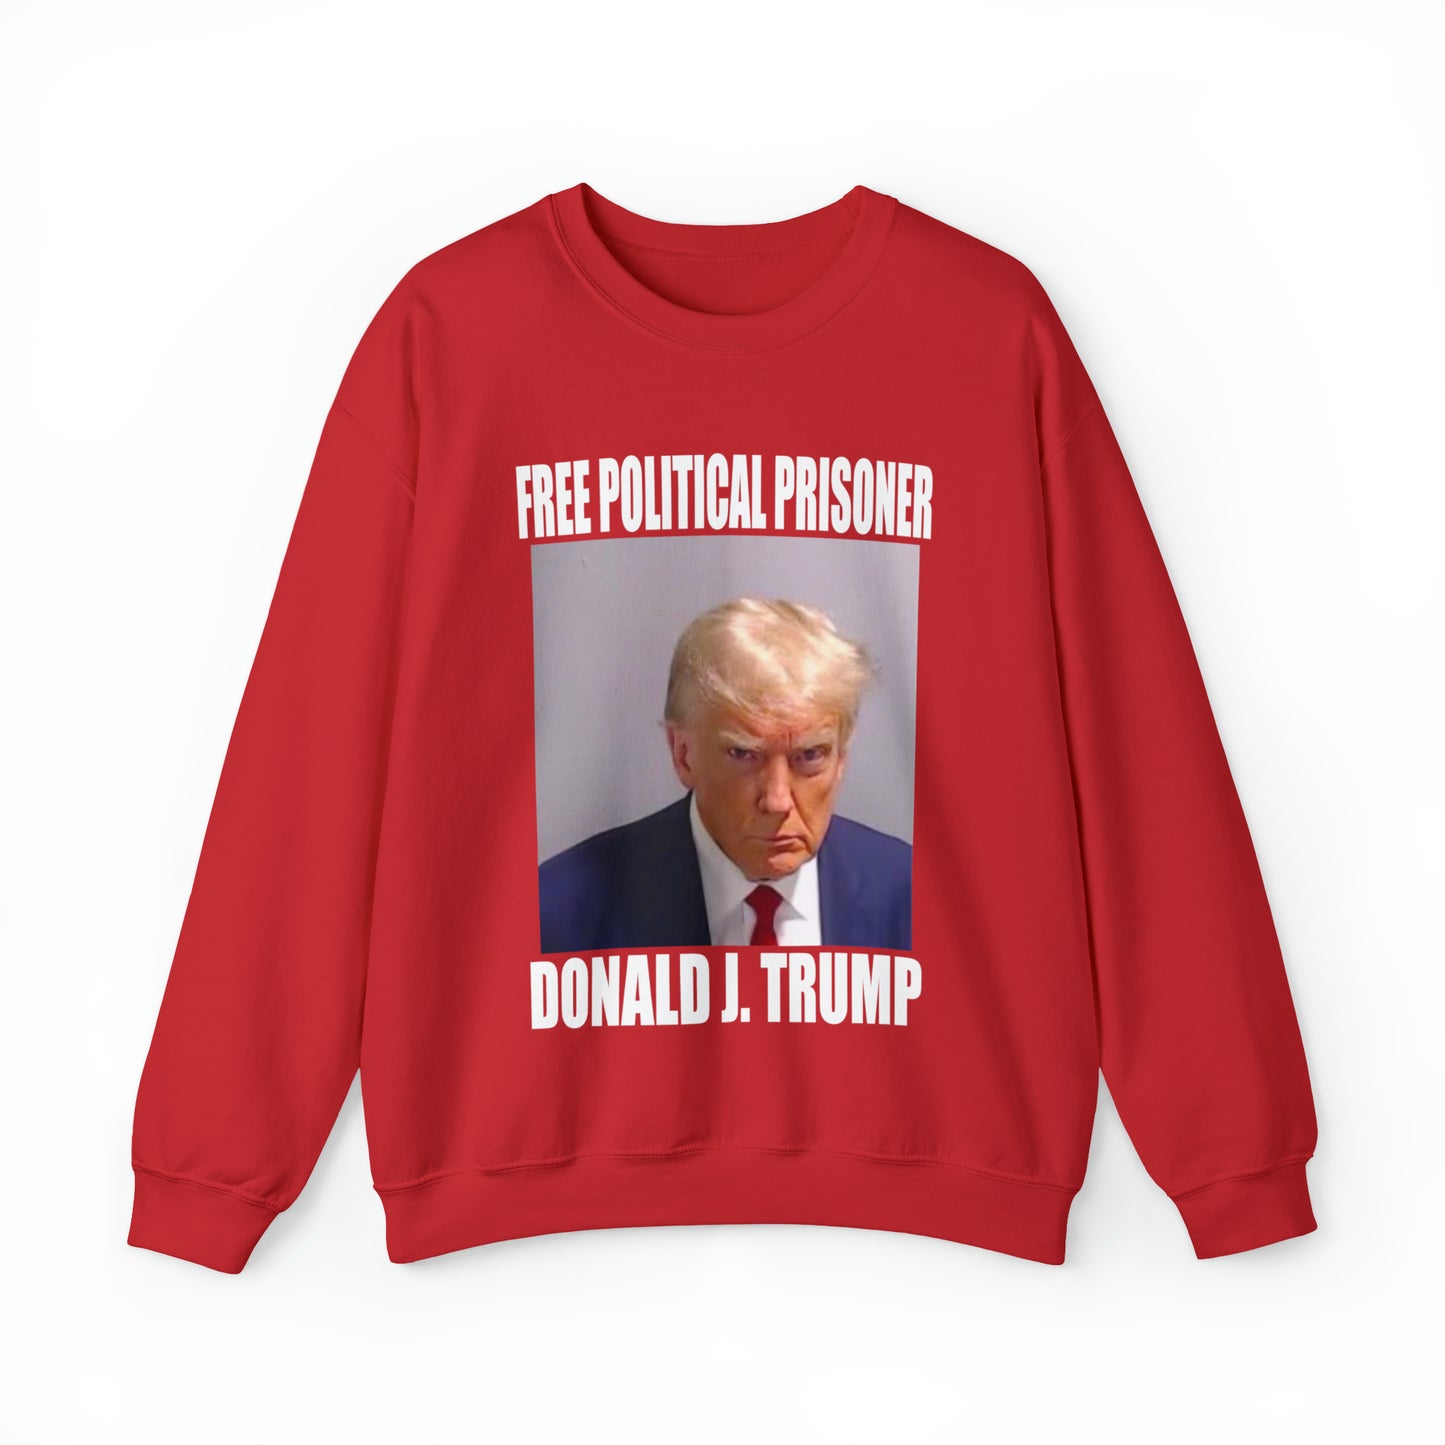 Trump Mugshot Crewneck Sweatshirt